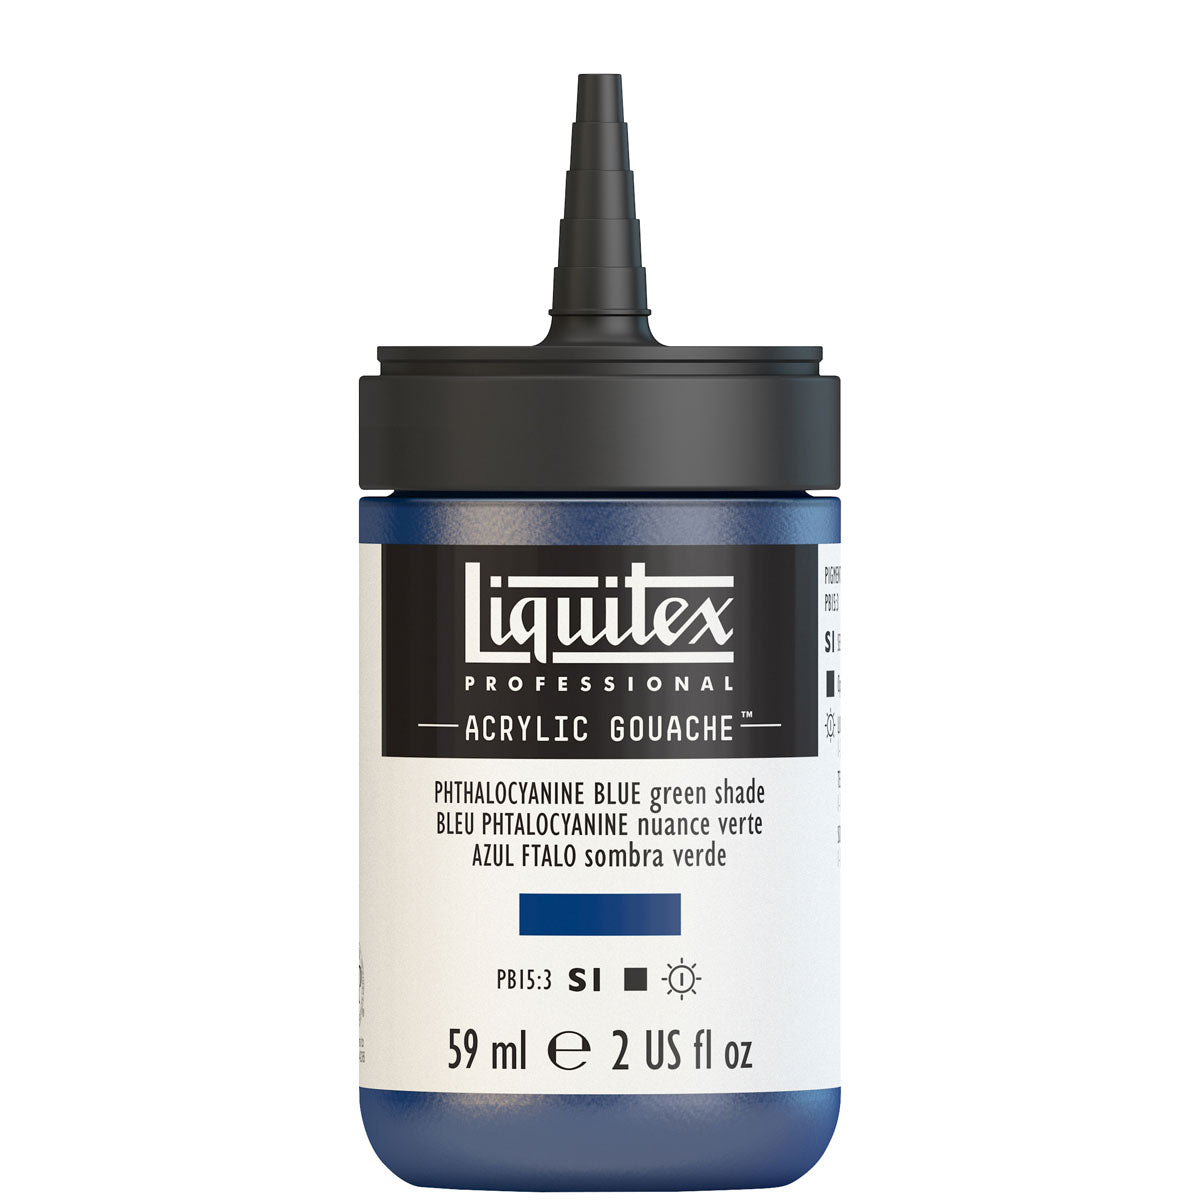 Liquitex - Acrylic Gouache 59ml S1 - Phthalocyanine Blue Green Shade